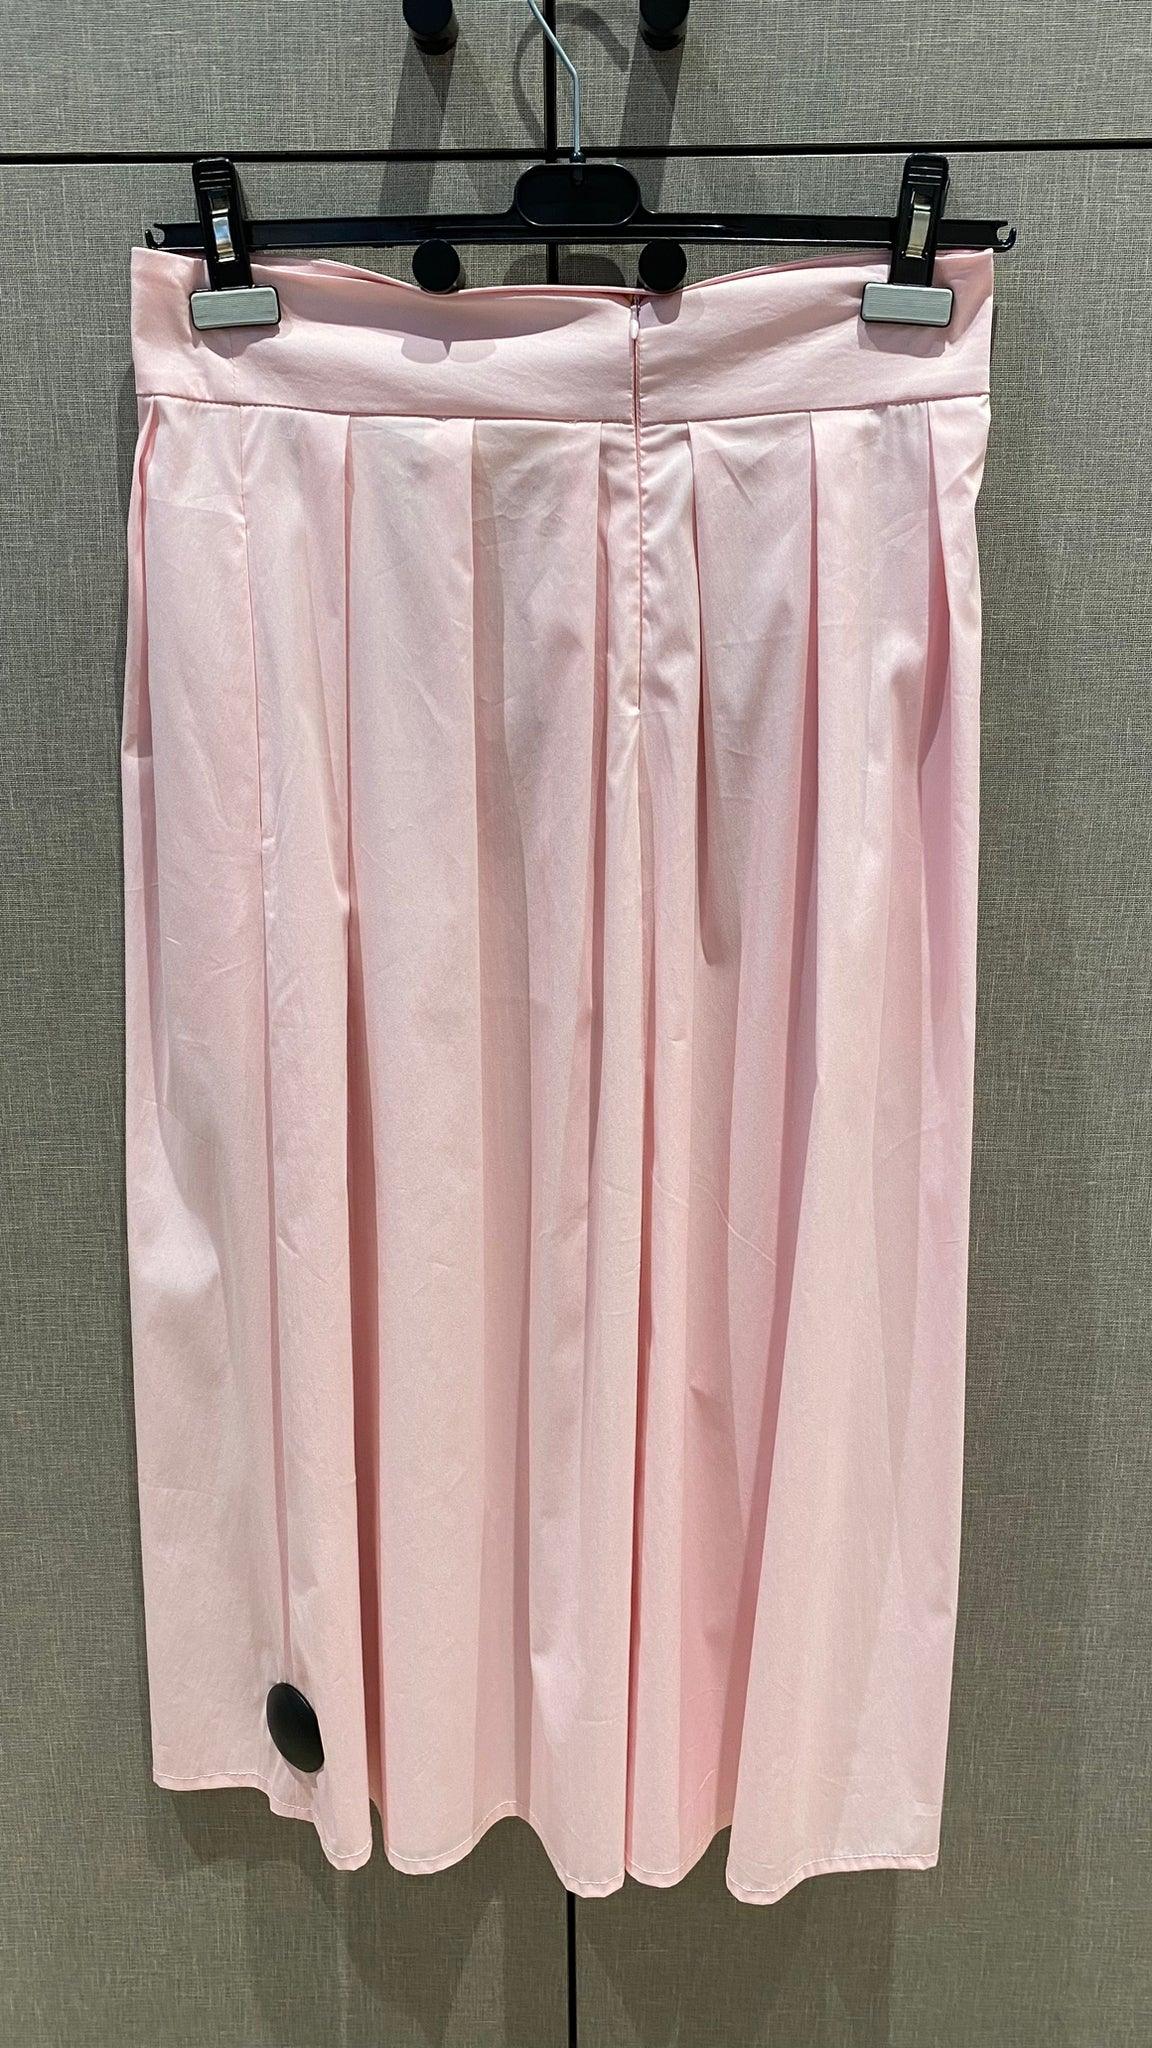 Rok Roze Leonie De Paris ( Lott Katoen/Lichtroz ) - Delaere Womenswear